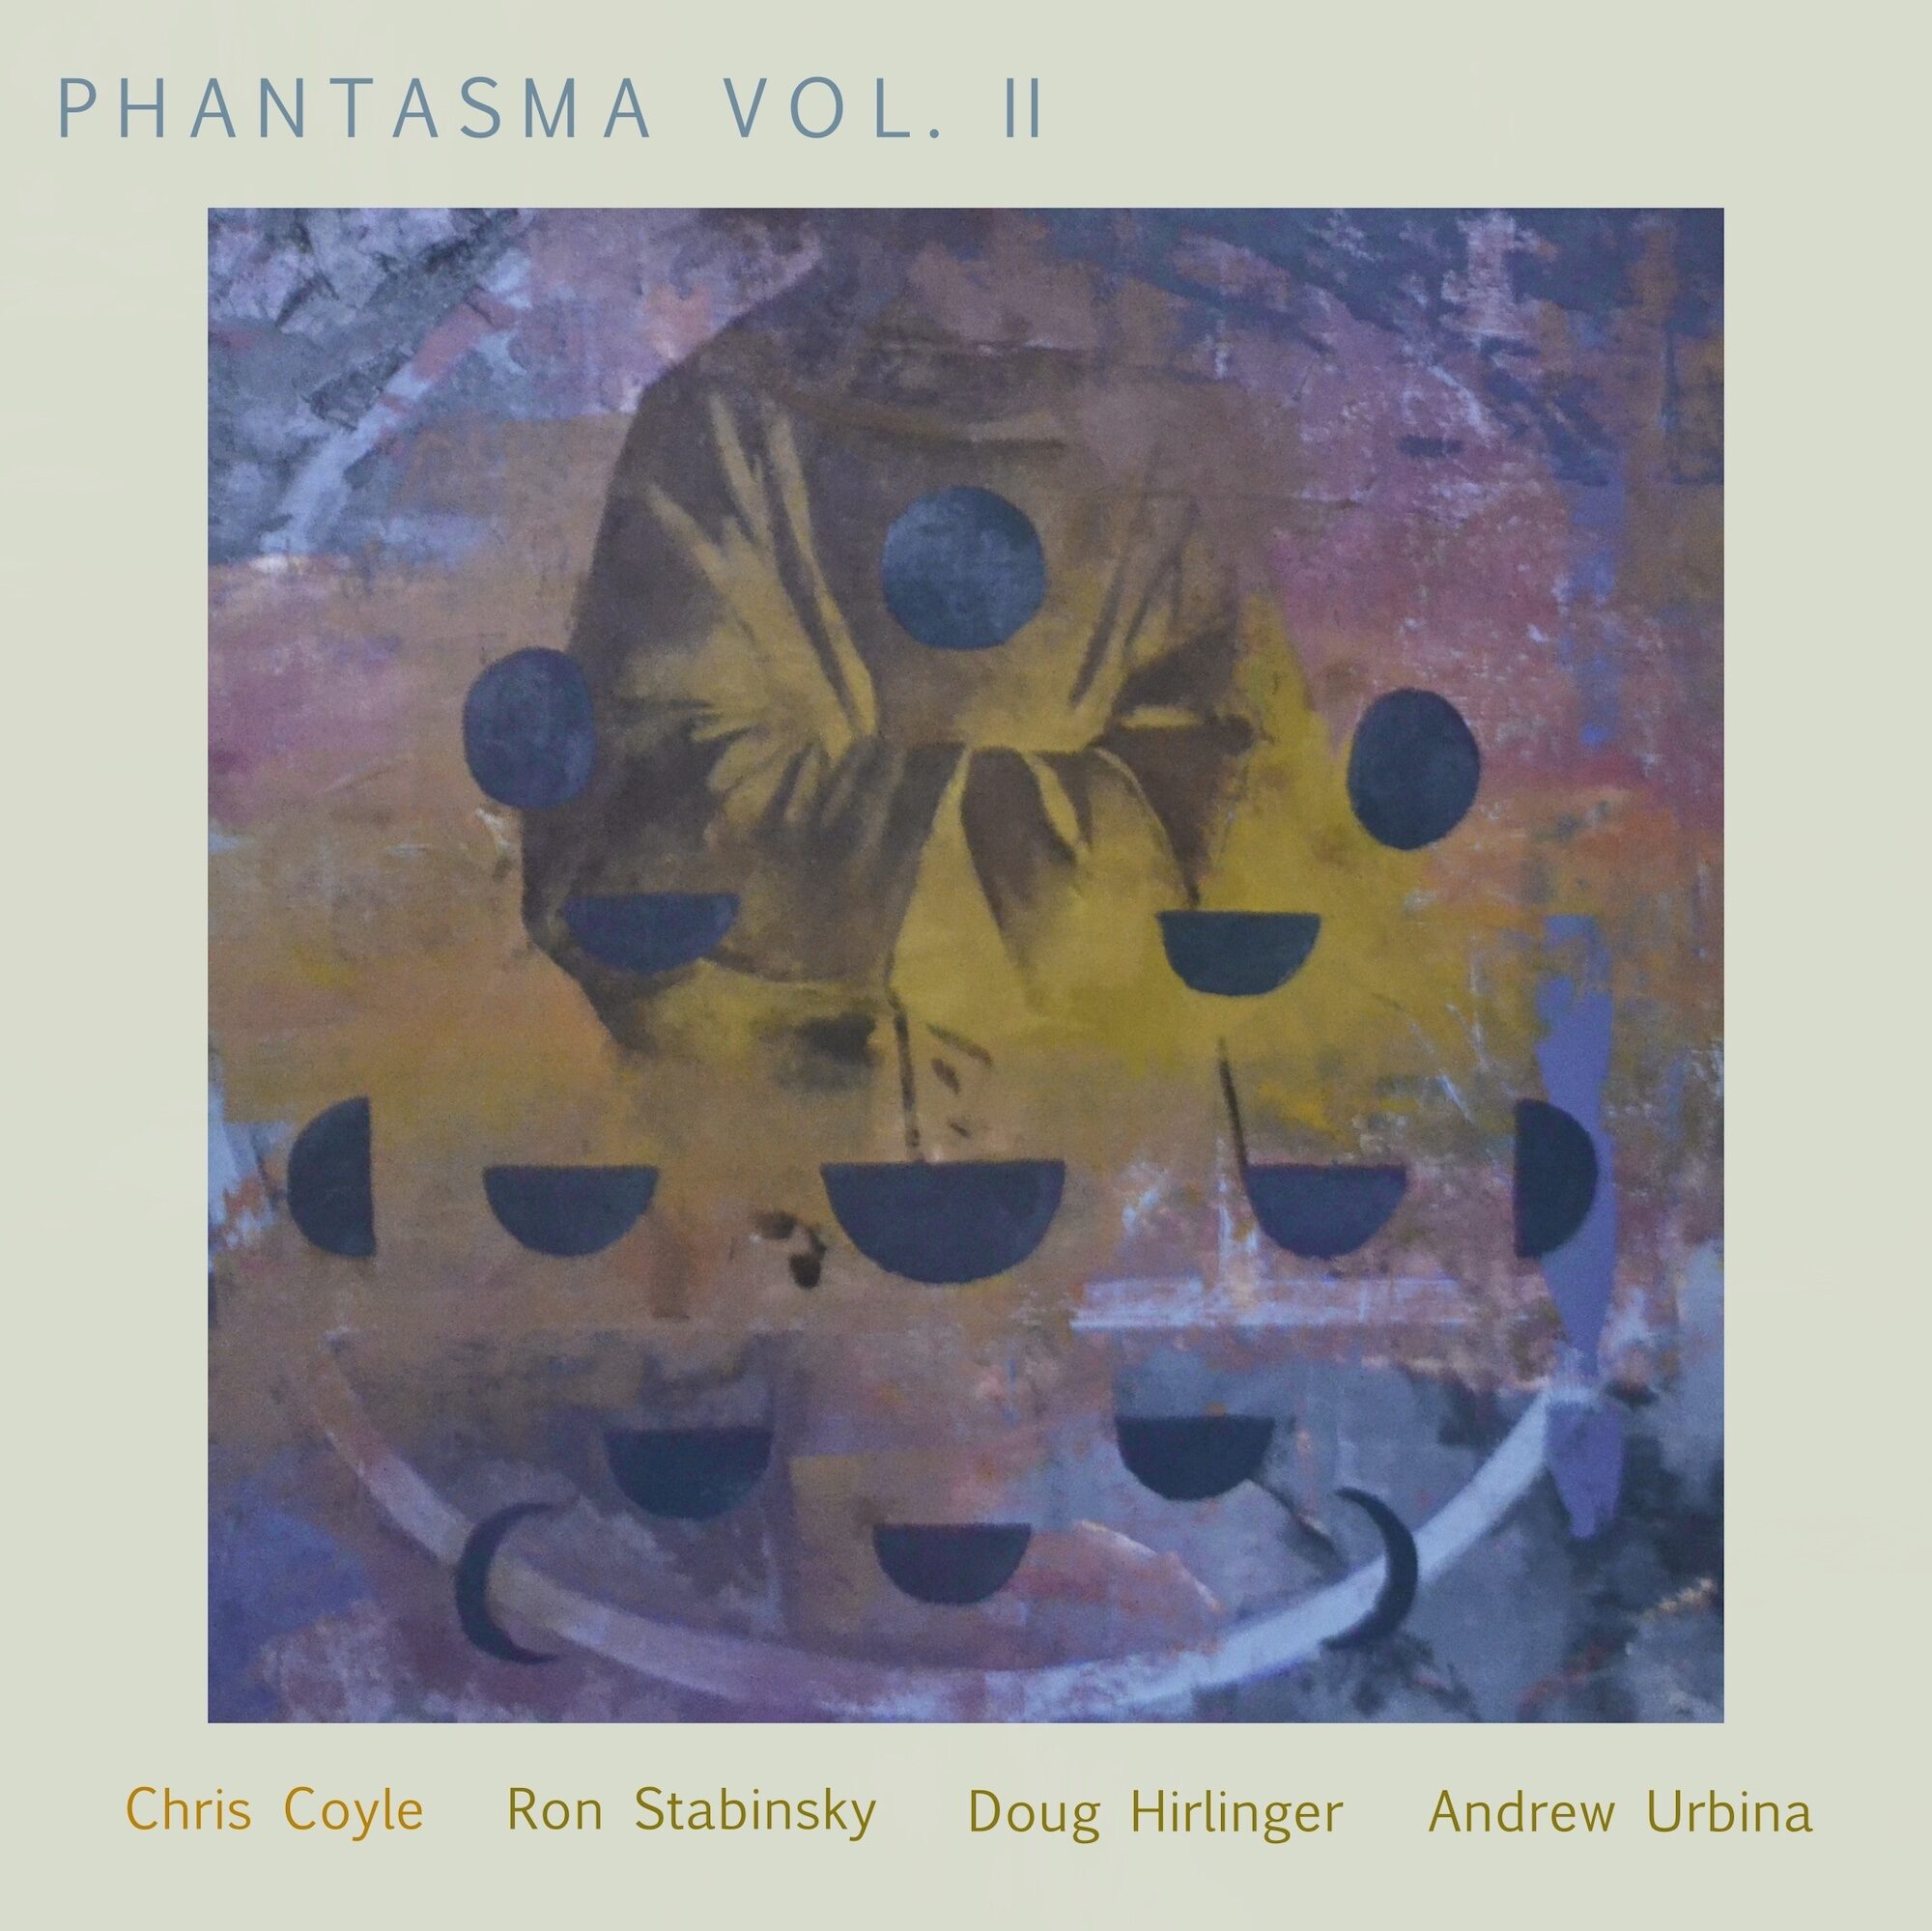 Phantasma Vol. II